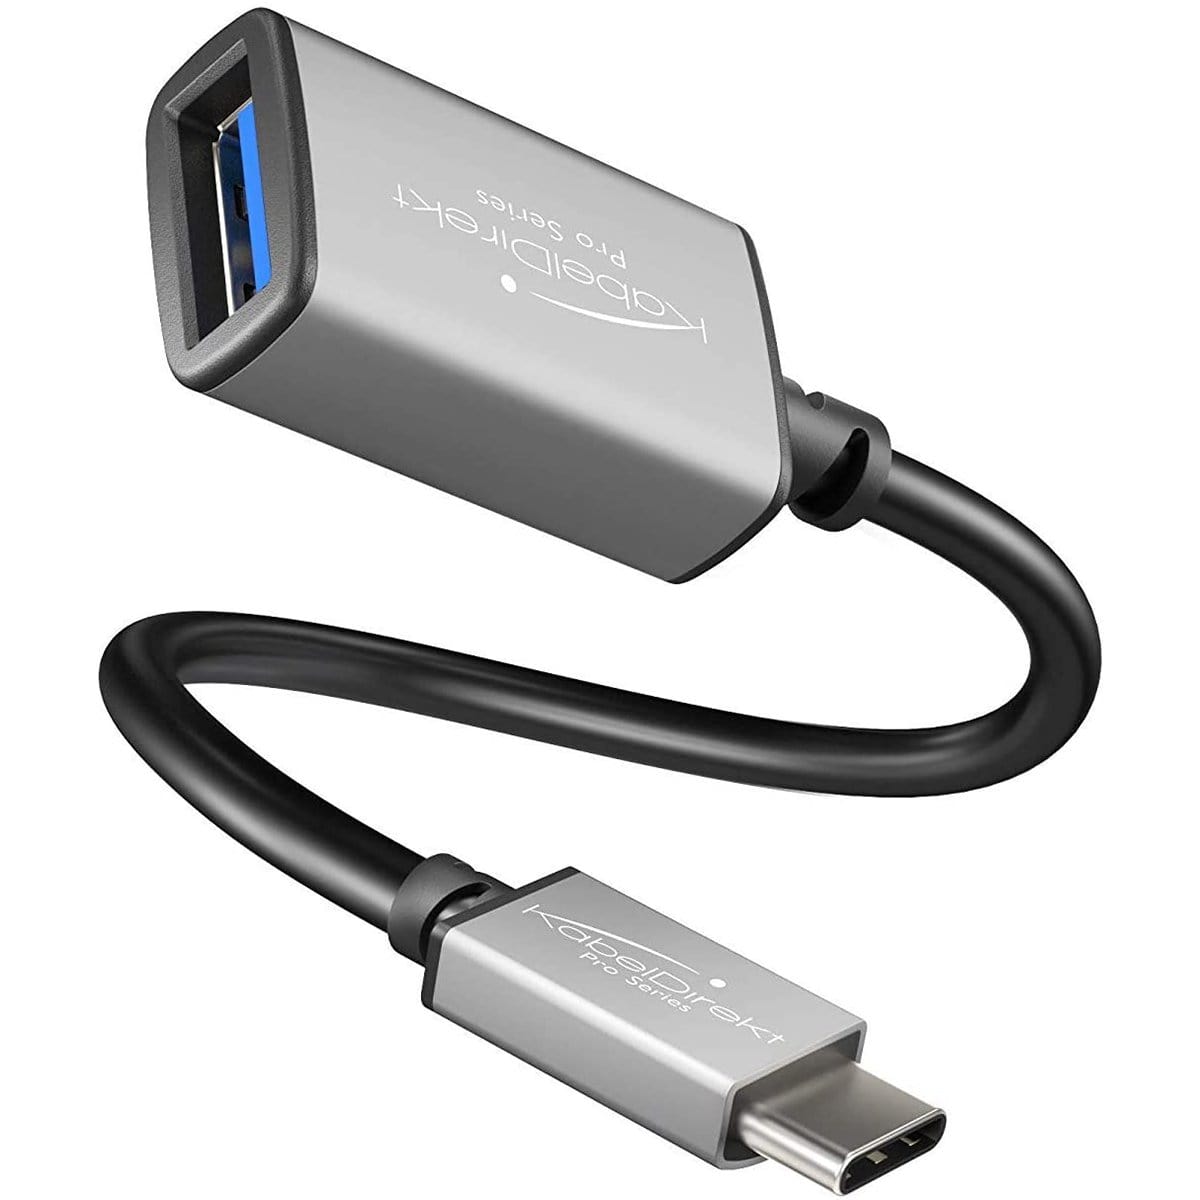 USB C Smartphone im Auto an AUX 3.5mm Audio anschliessen 1 m AUX